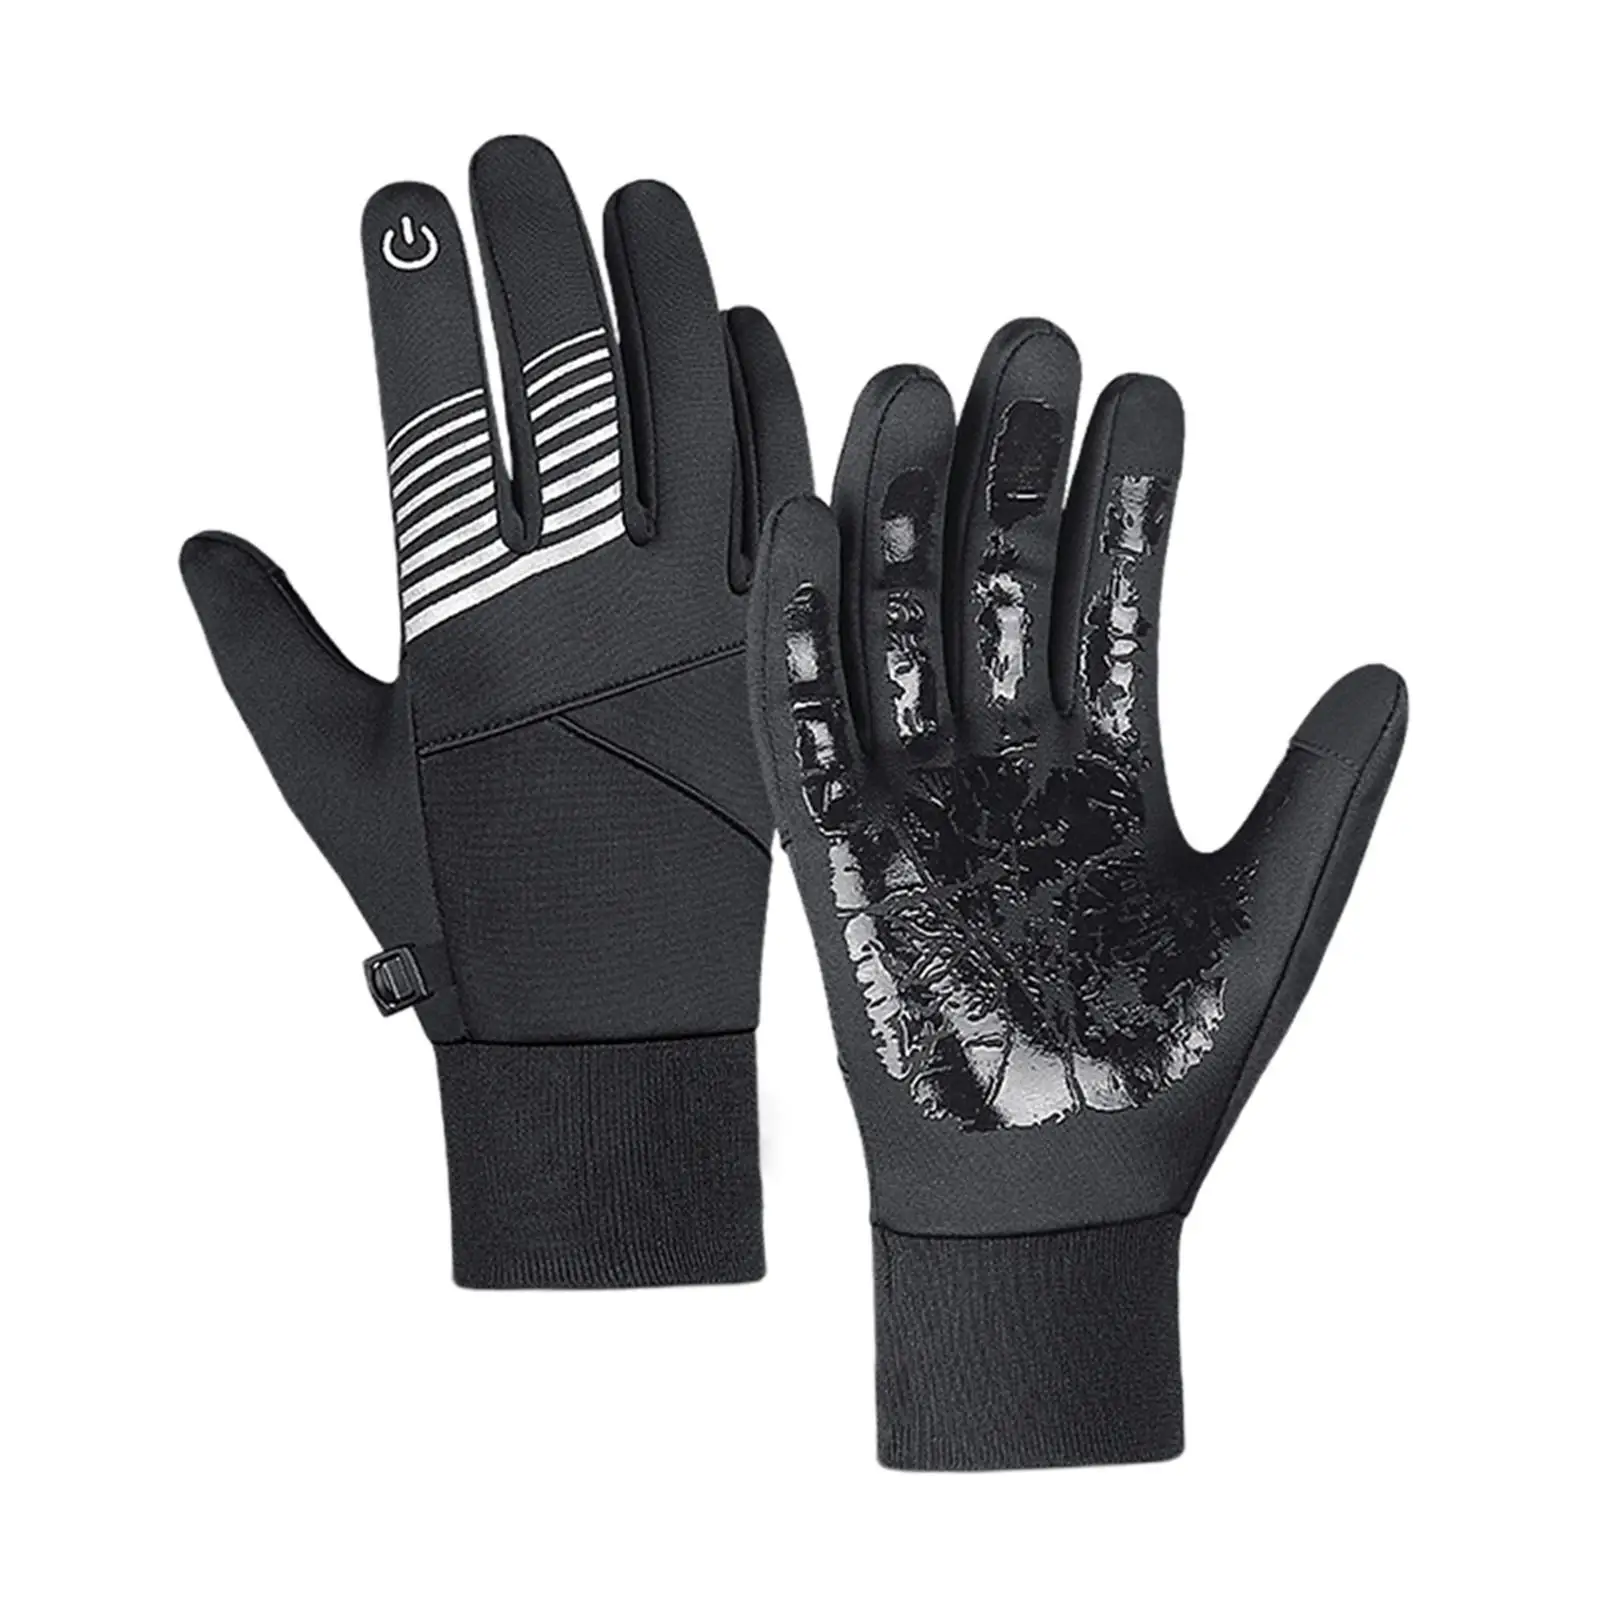 Men Winter Gloves Non Slip Palm Lightweight for Fishing Outdoor Activities